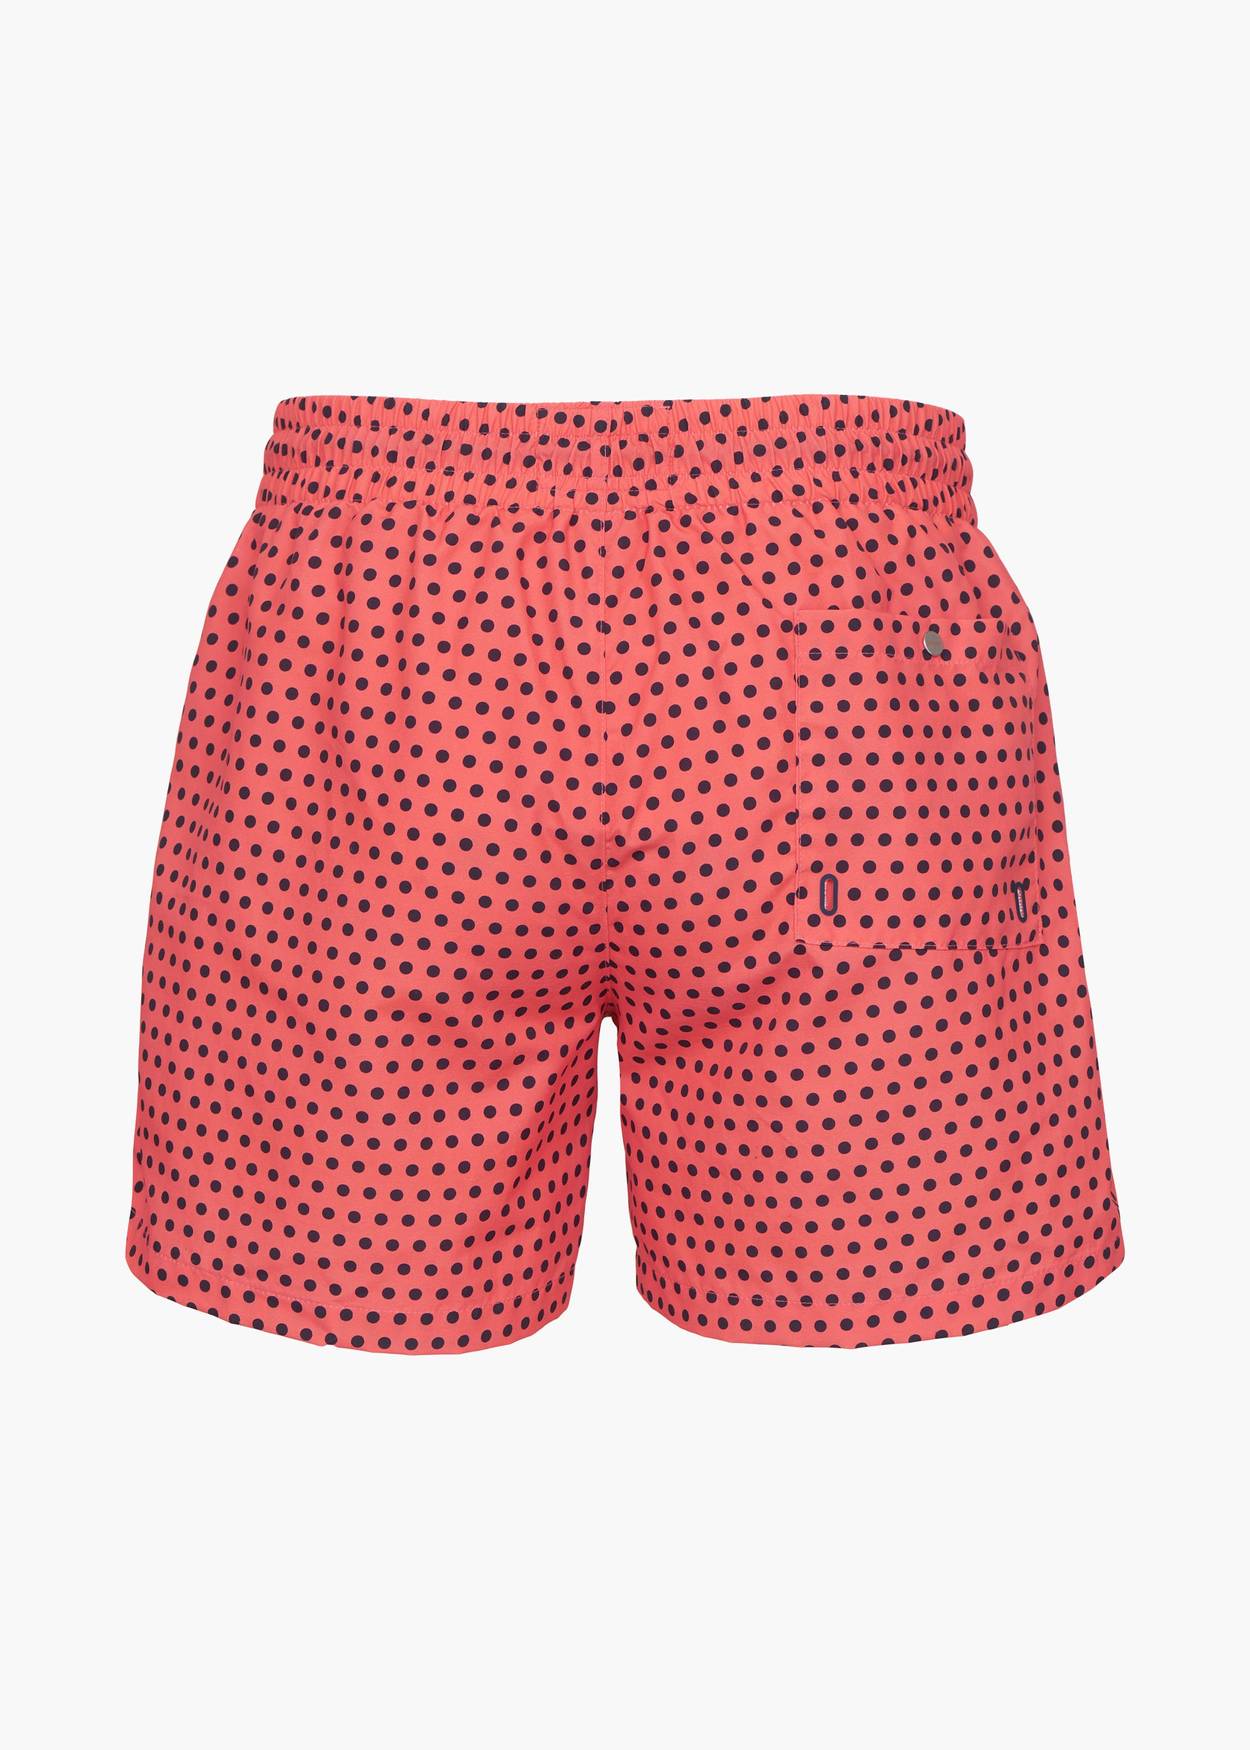 The Printed Swim Shorts